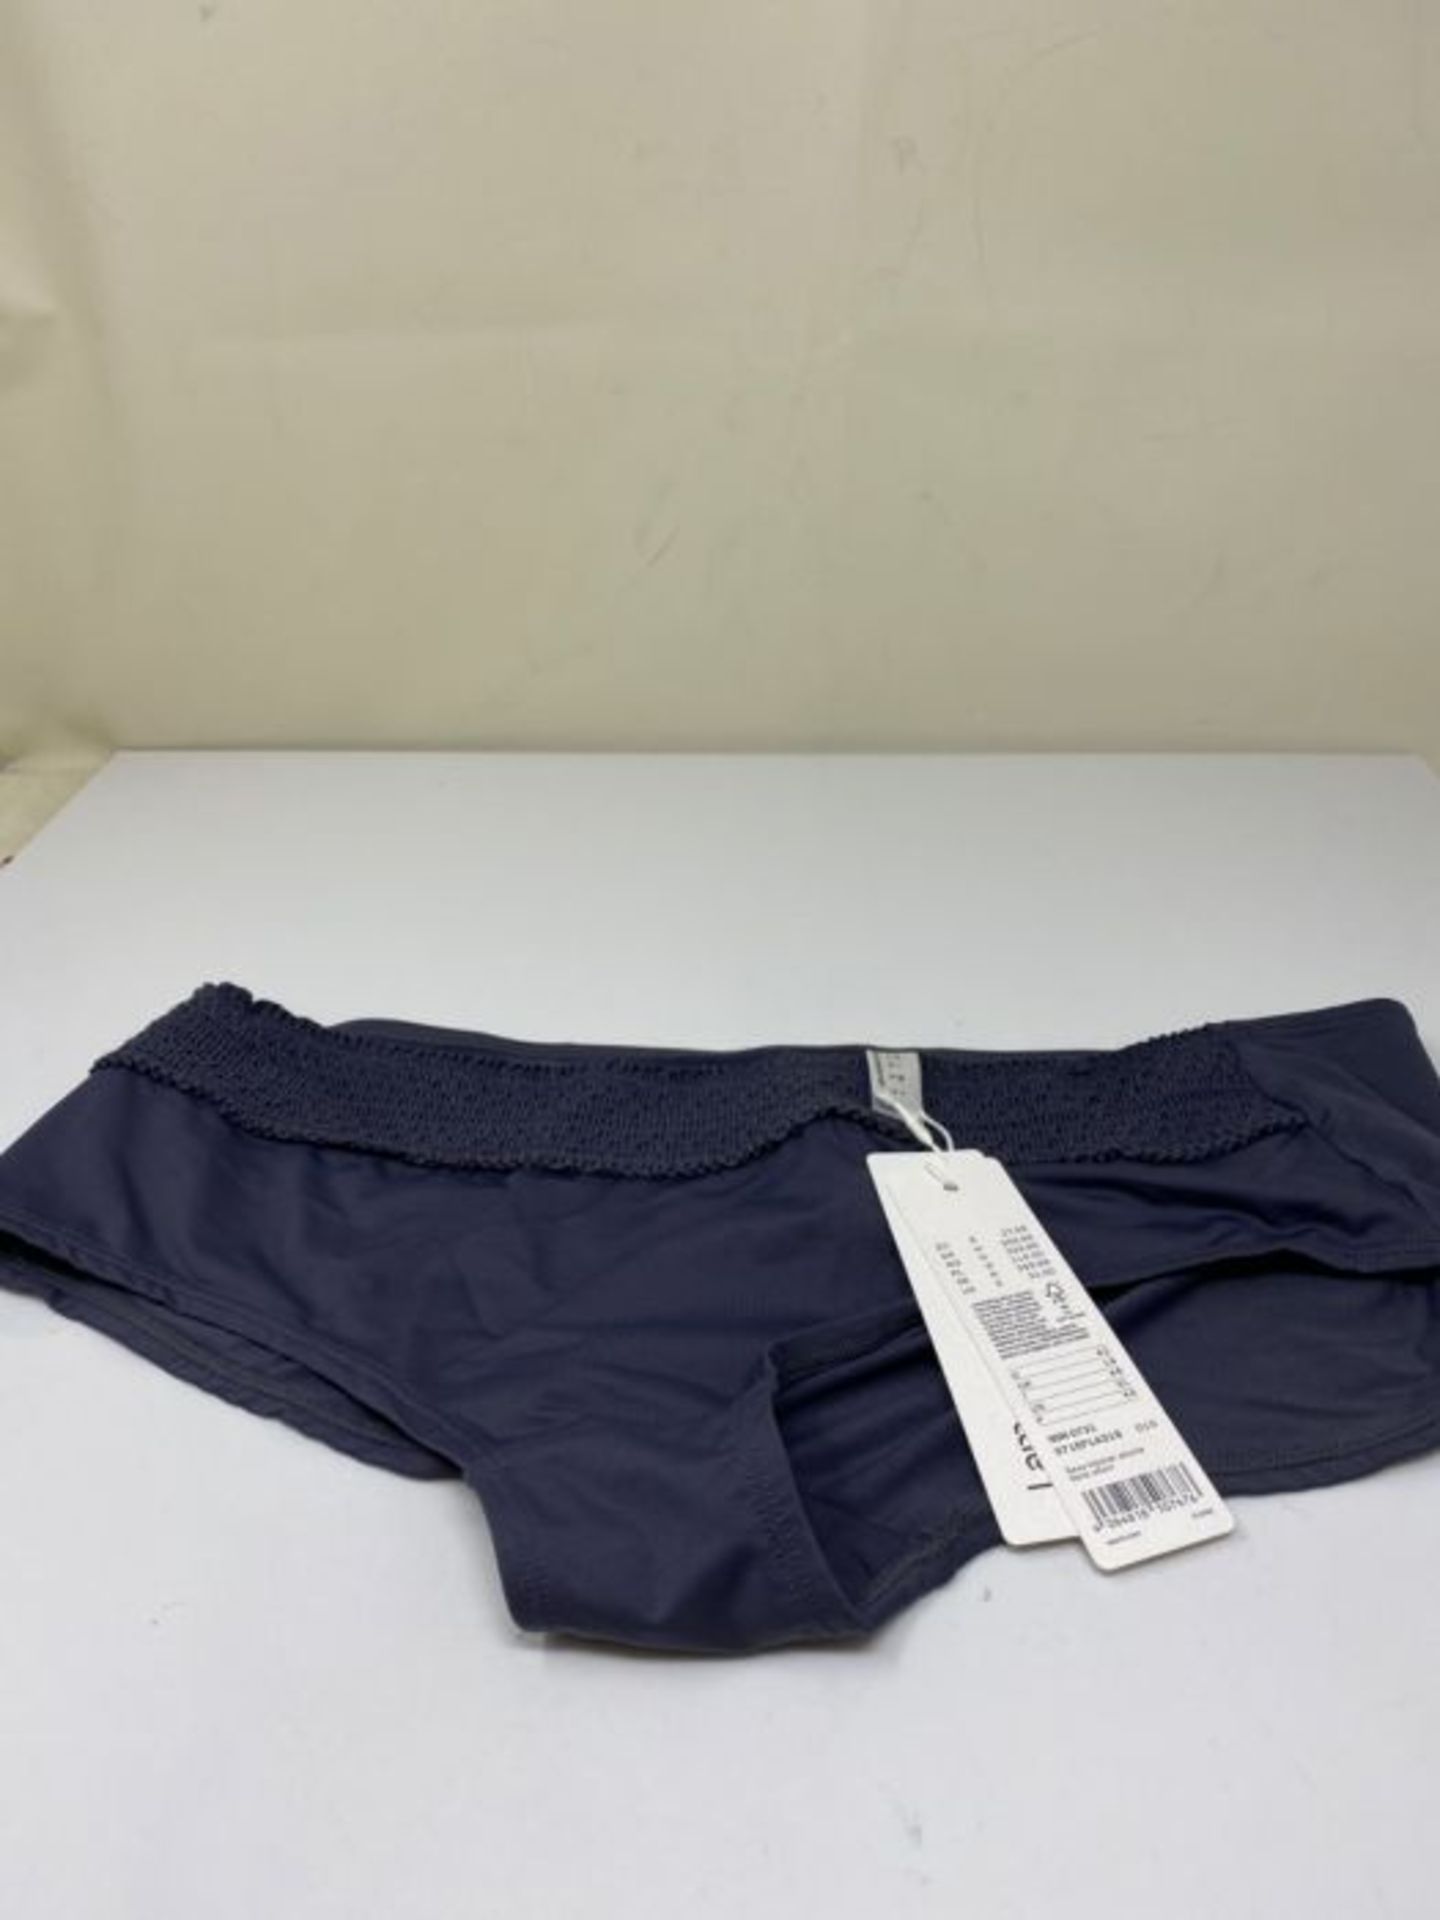 RRP £50.00 ESPRIT Women's Blue Beach NYR Sexy Hipster Shorts Bikini Bottoms, 10, 12 - Image 2 of 2